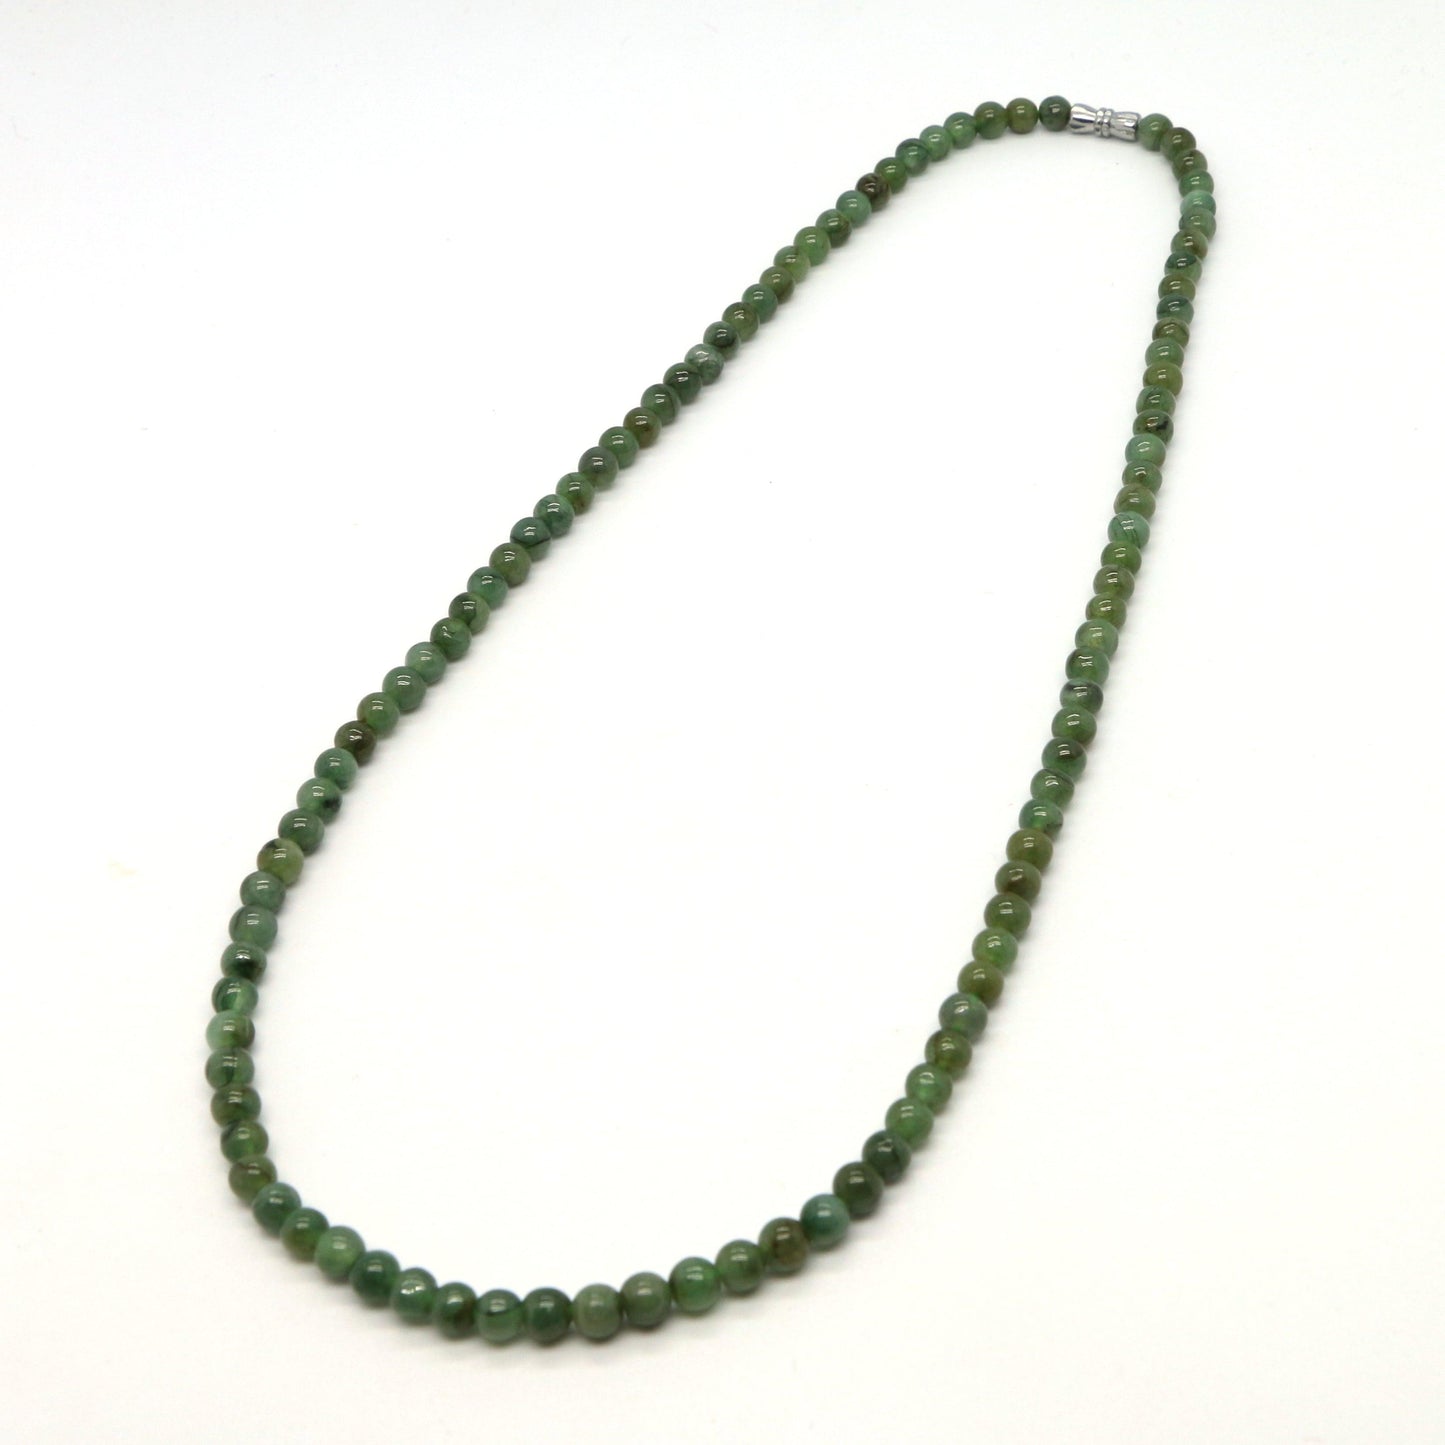 Type A Jadeite Jade Necklace Series (Fullfill USA only) B09LHFM6ND - Jade-collector.com